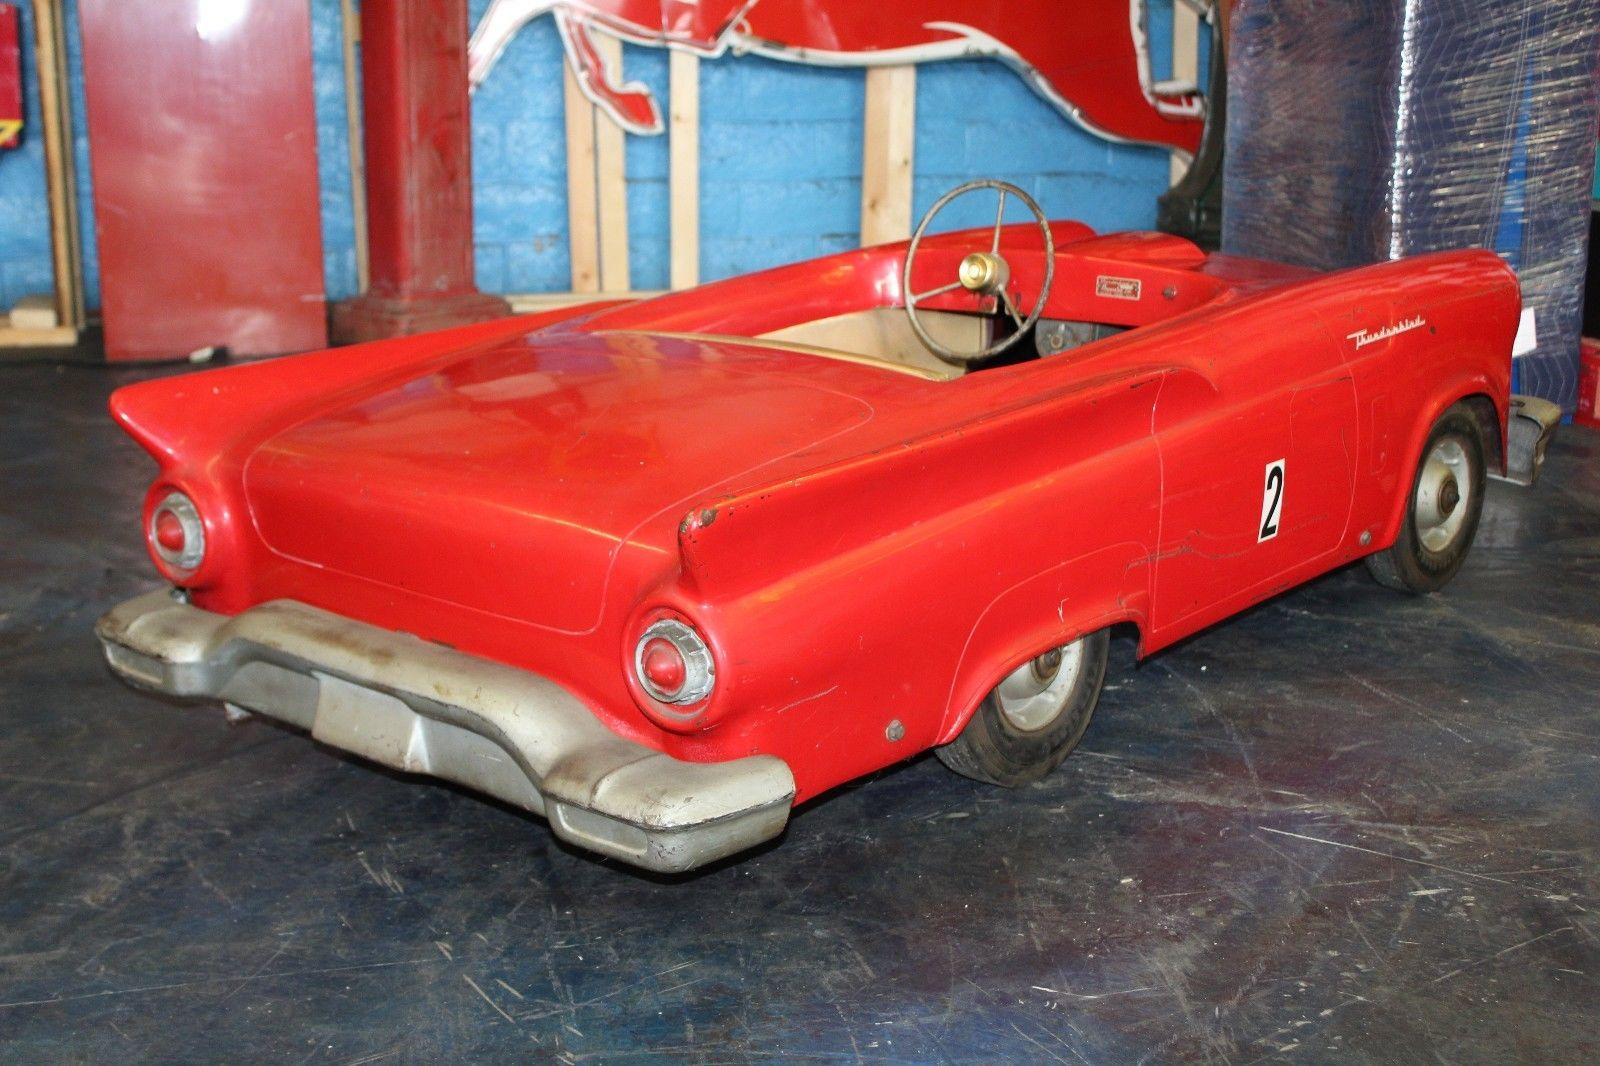 American 1957 Vintage Ford Thunderbird Jr. Powercar Electric Kiddie Car For Sale